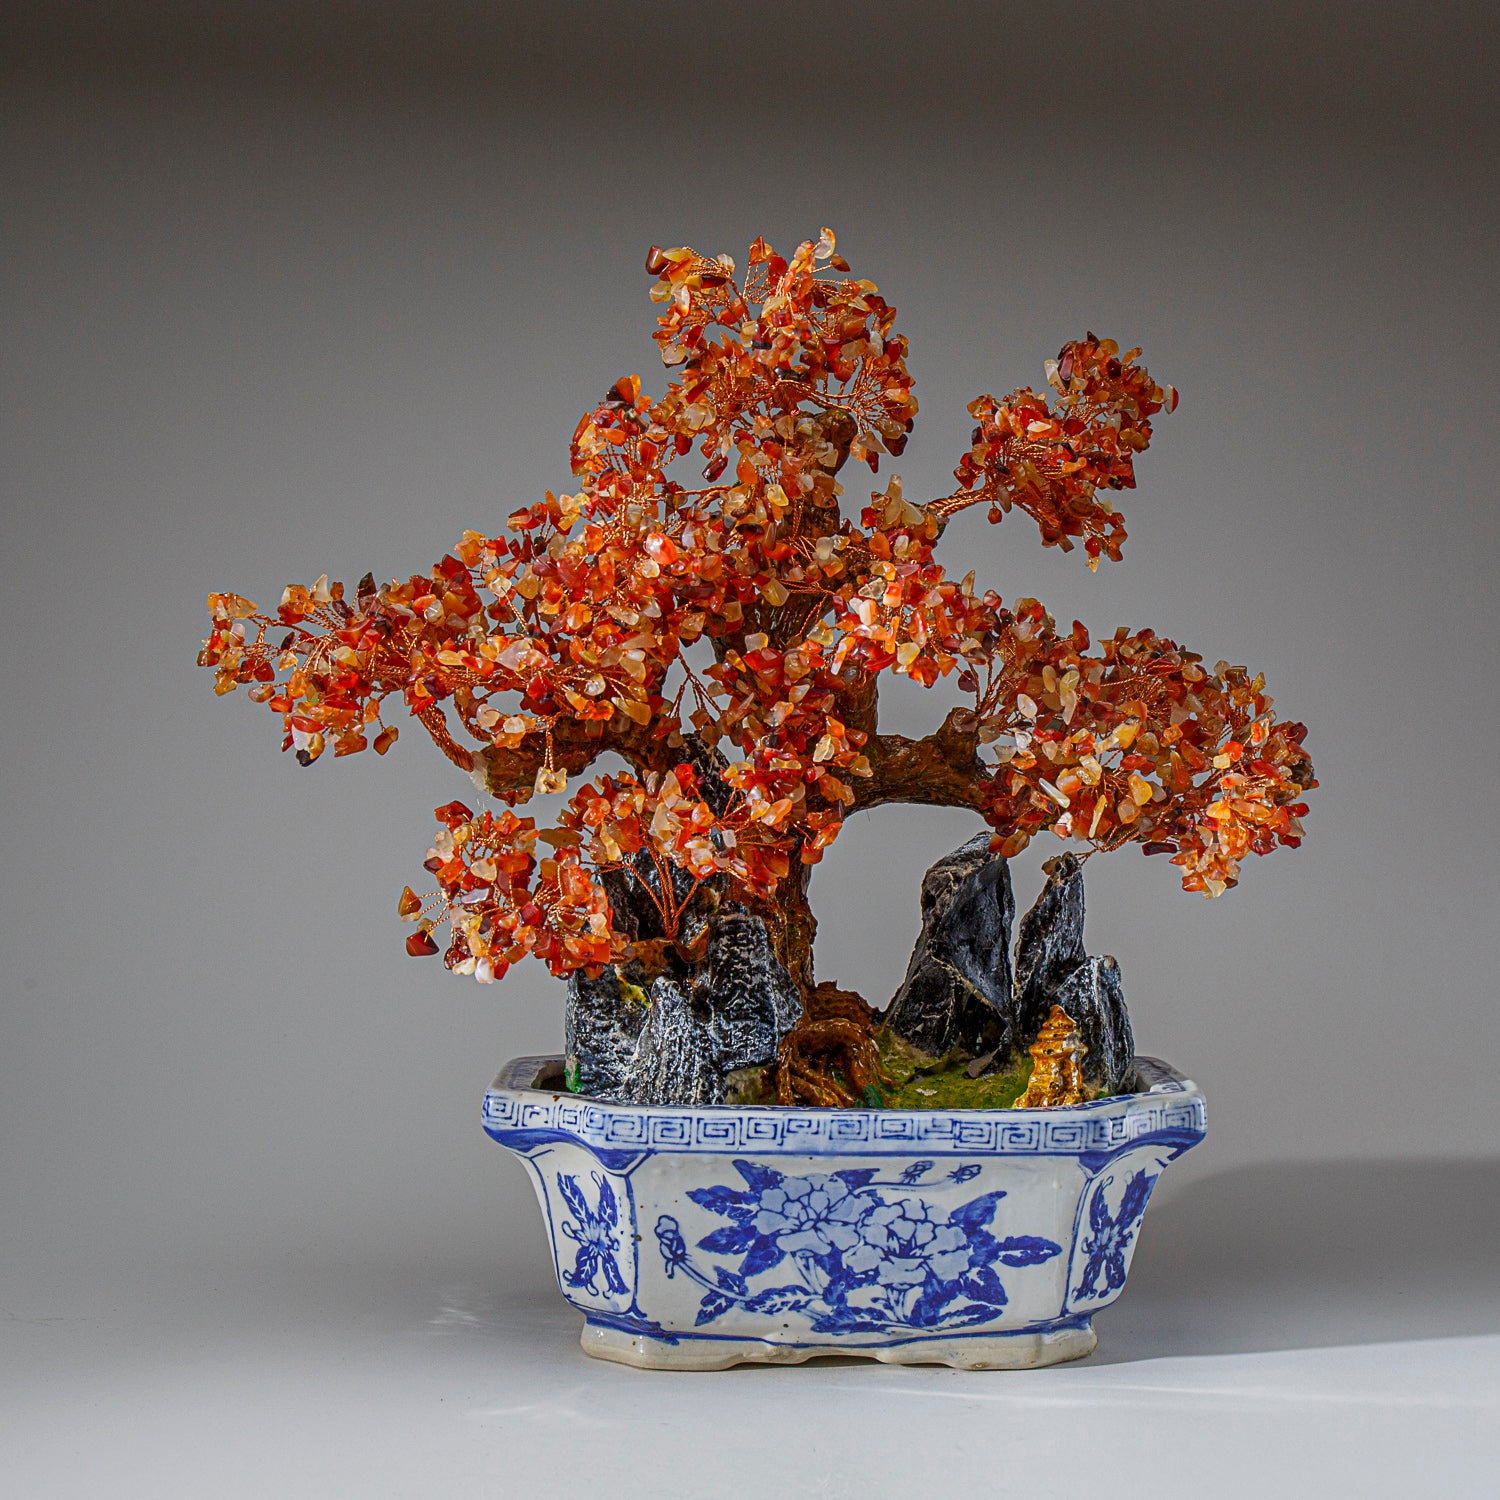 Genuine Carnelian Gemstone Bonsai Tree in Square Ceramic Pot (15” Tall)